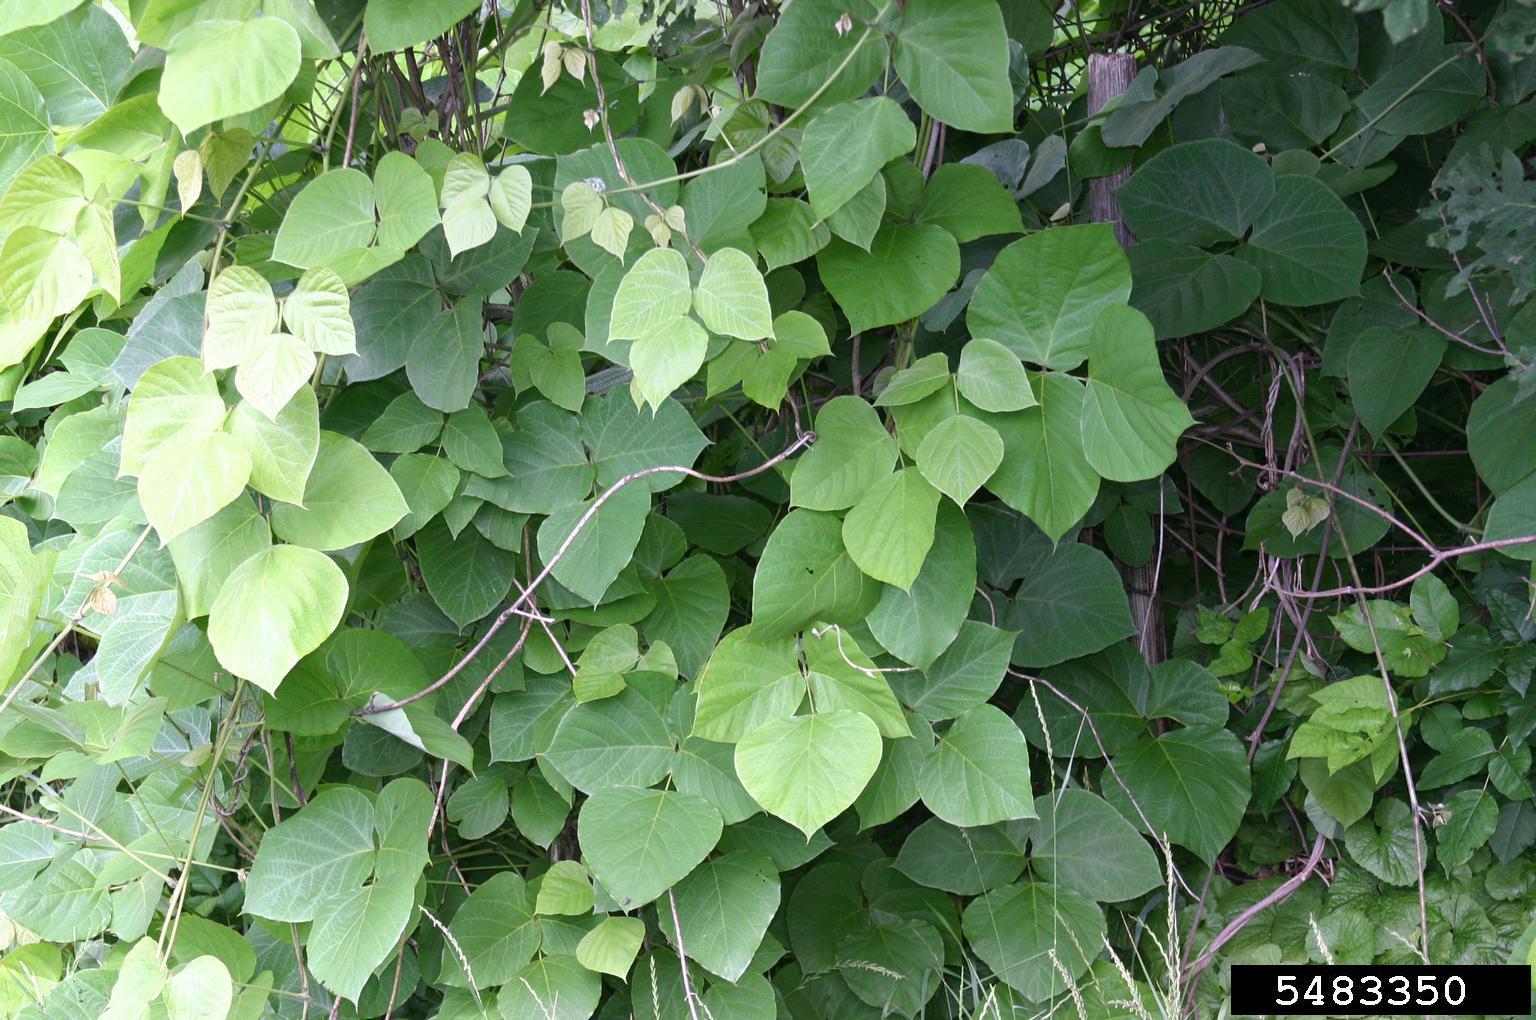 kudzu vines covering other plants